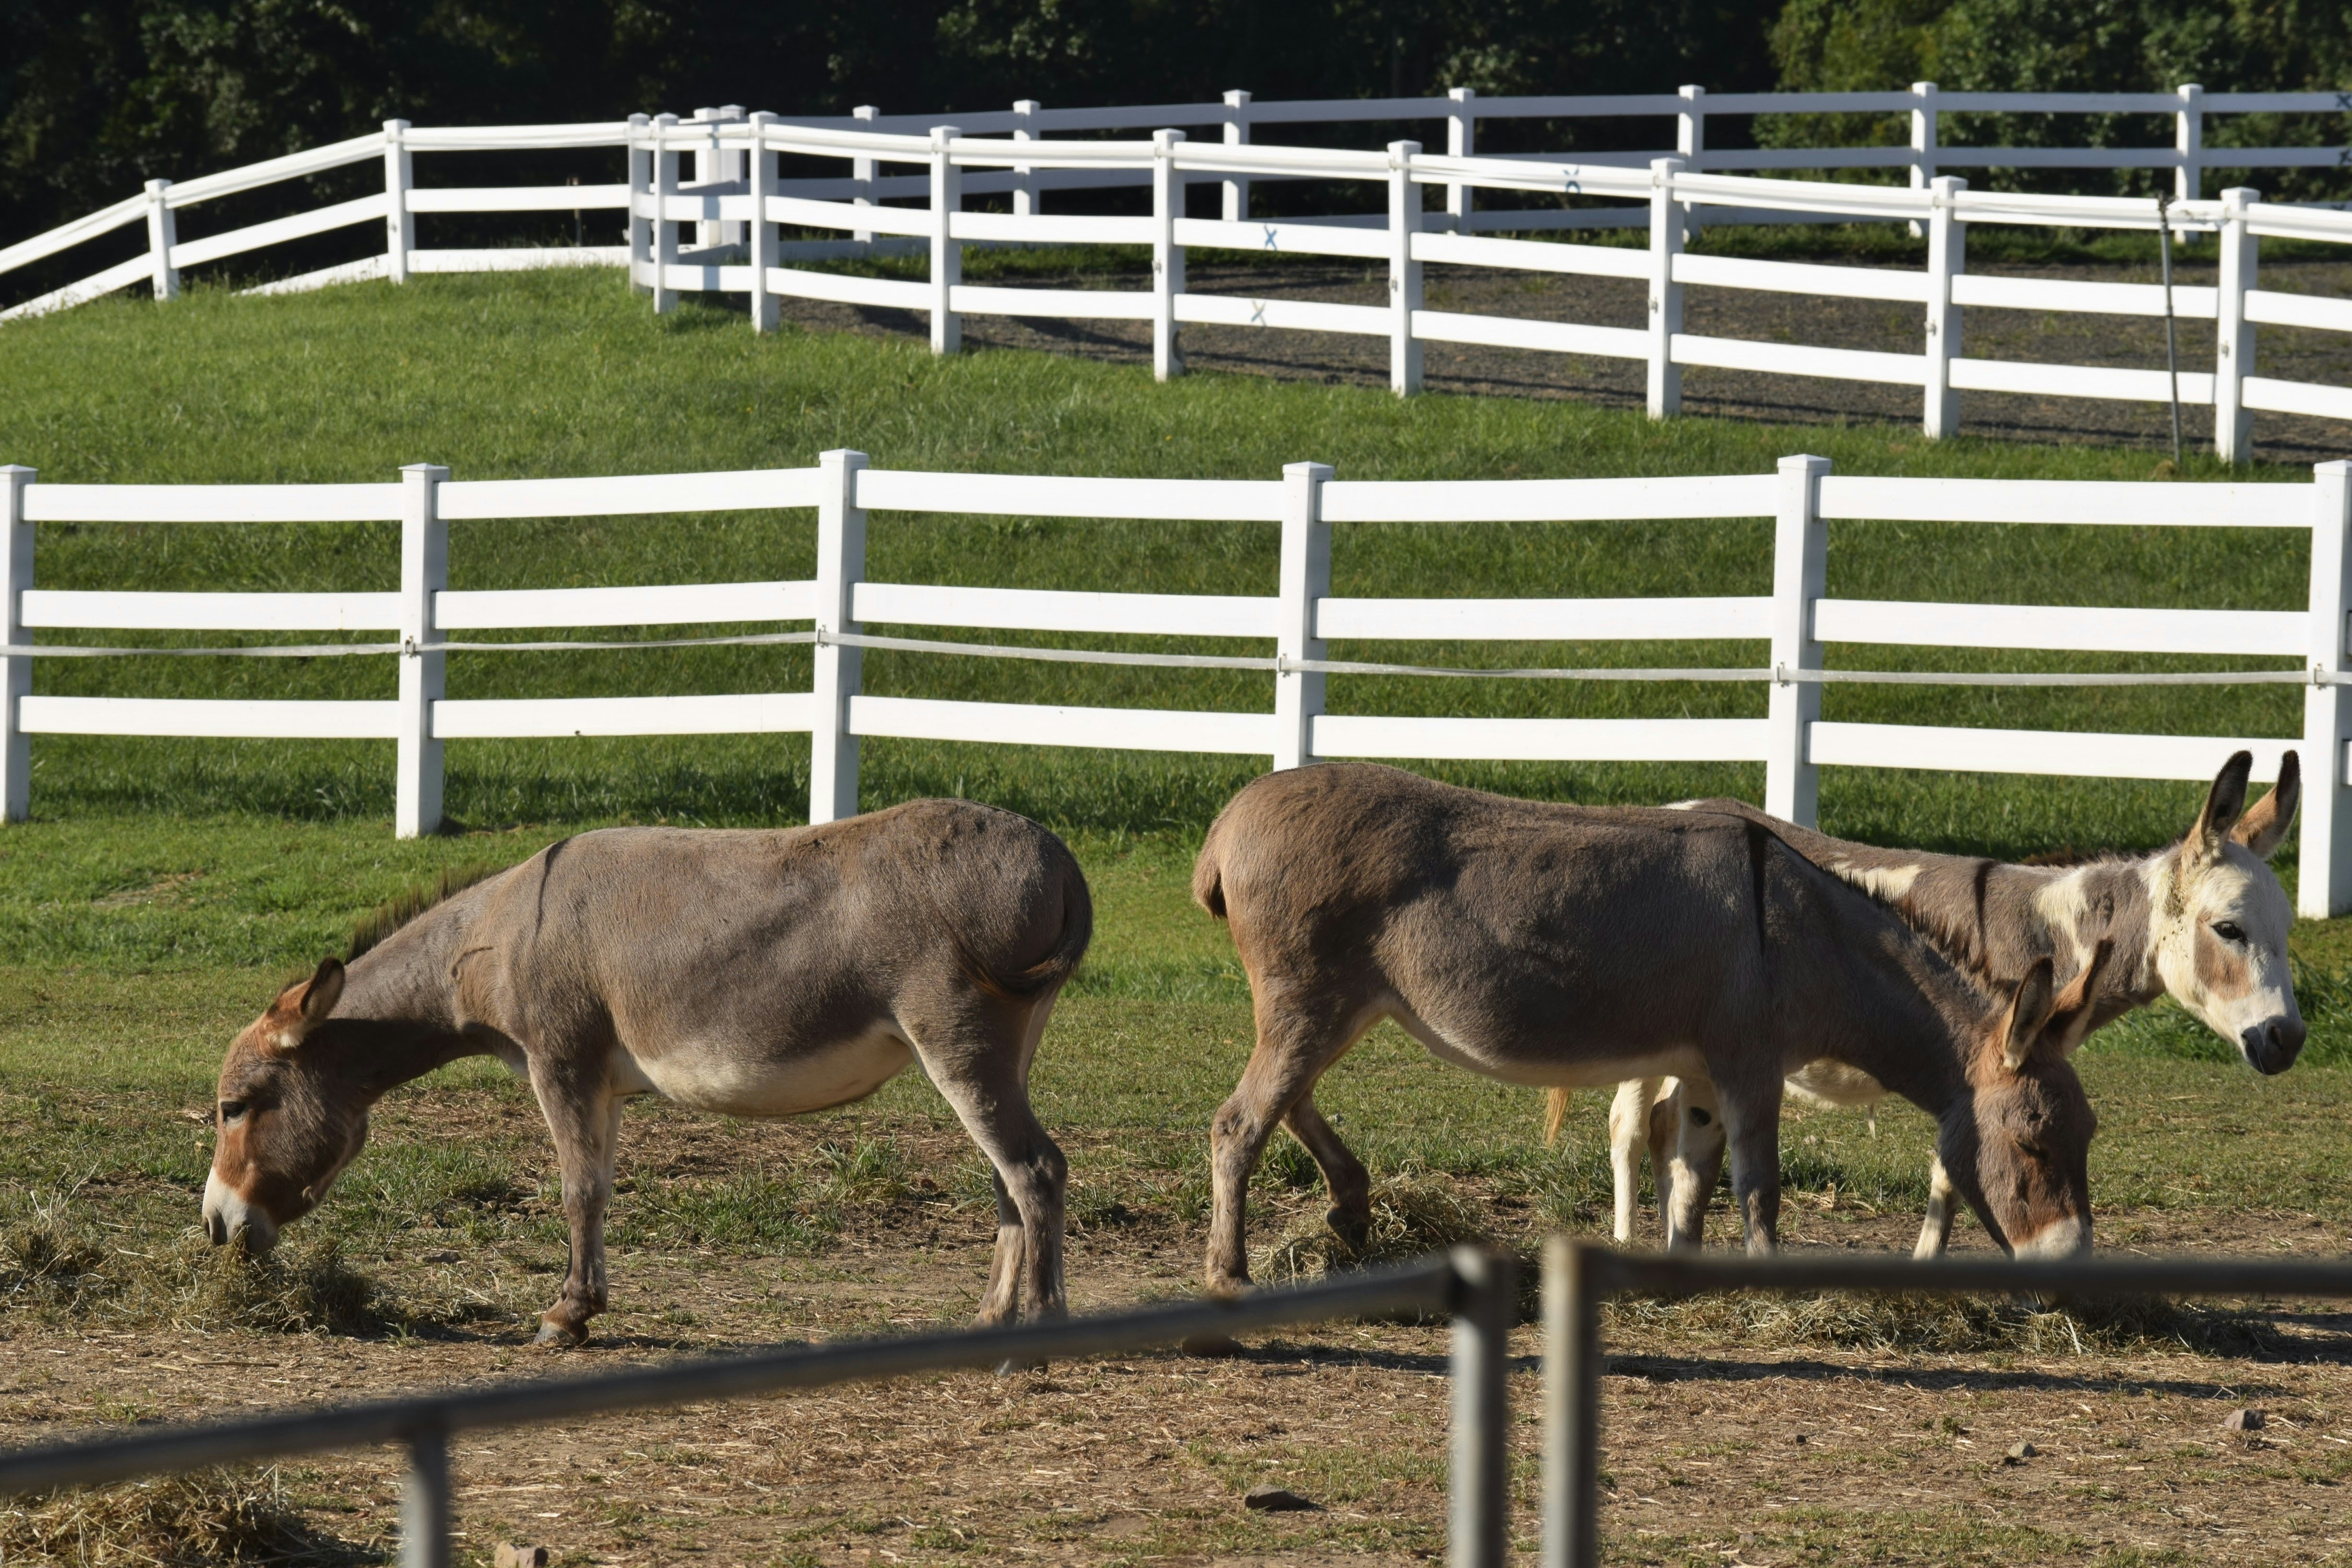 Donkeys at Carousel Park.